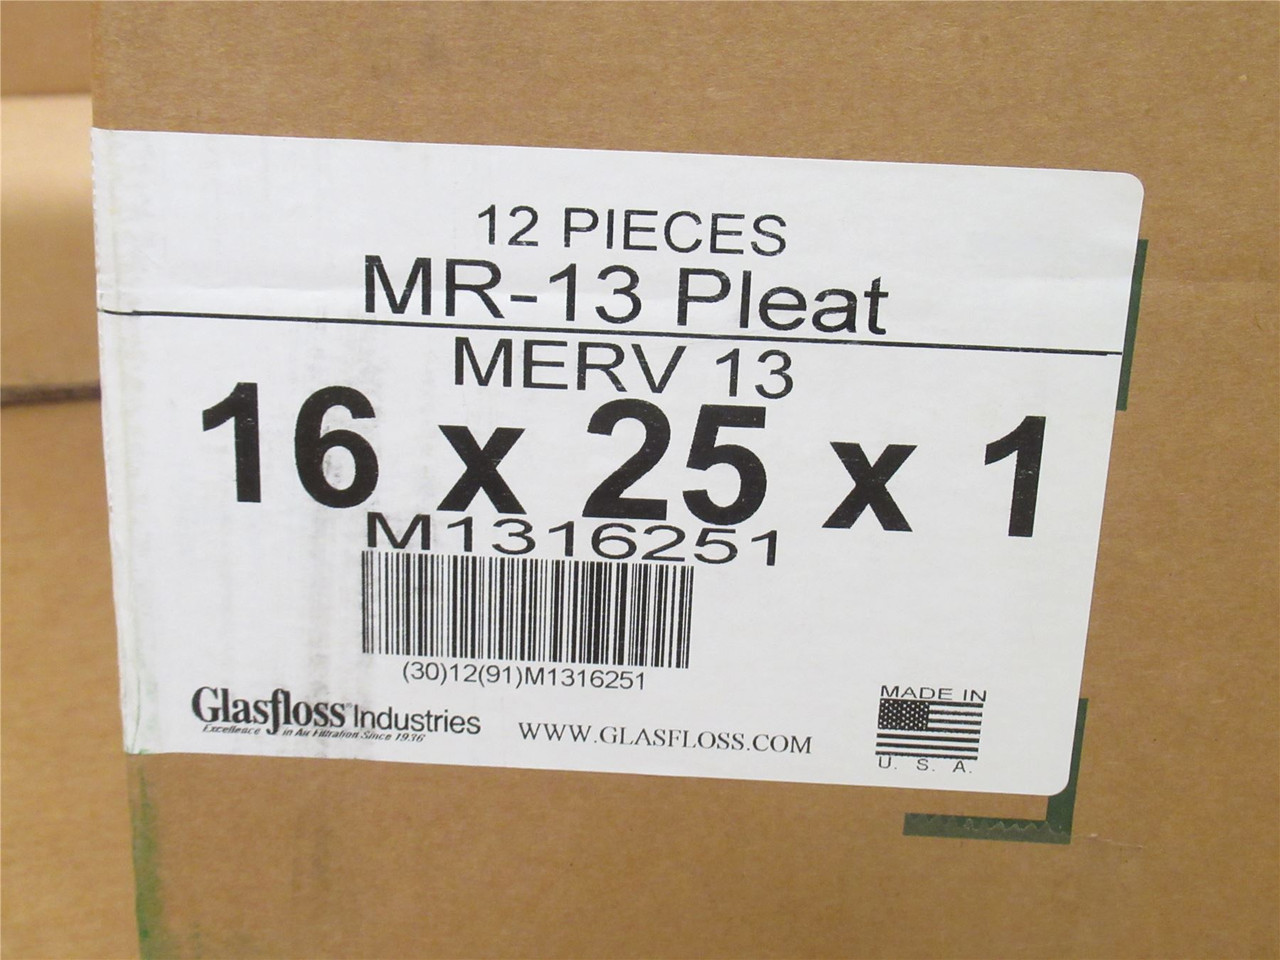 Glasfloss M1316251; Box-12 Pleated Air Filter; 16" x 25" x 1"